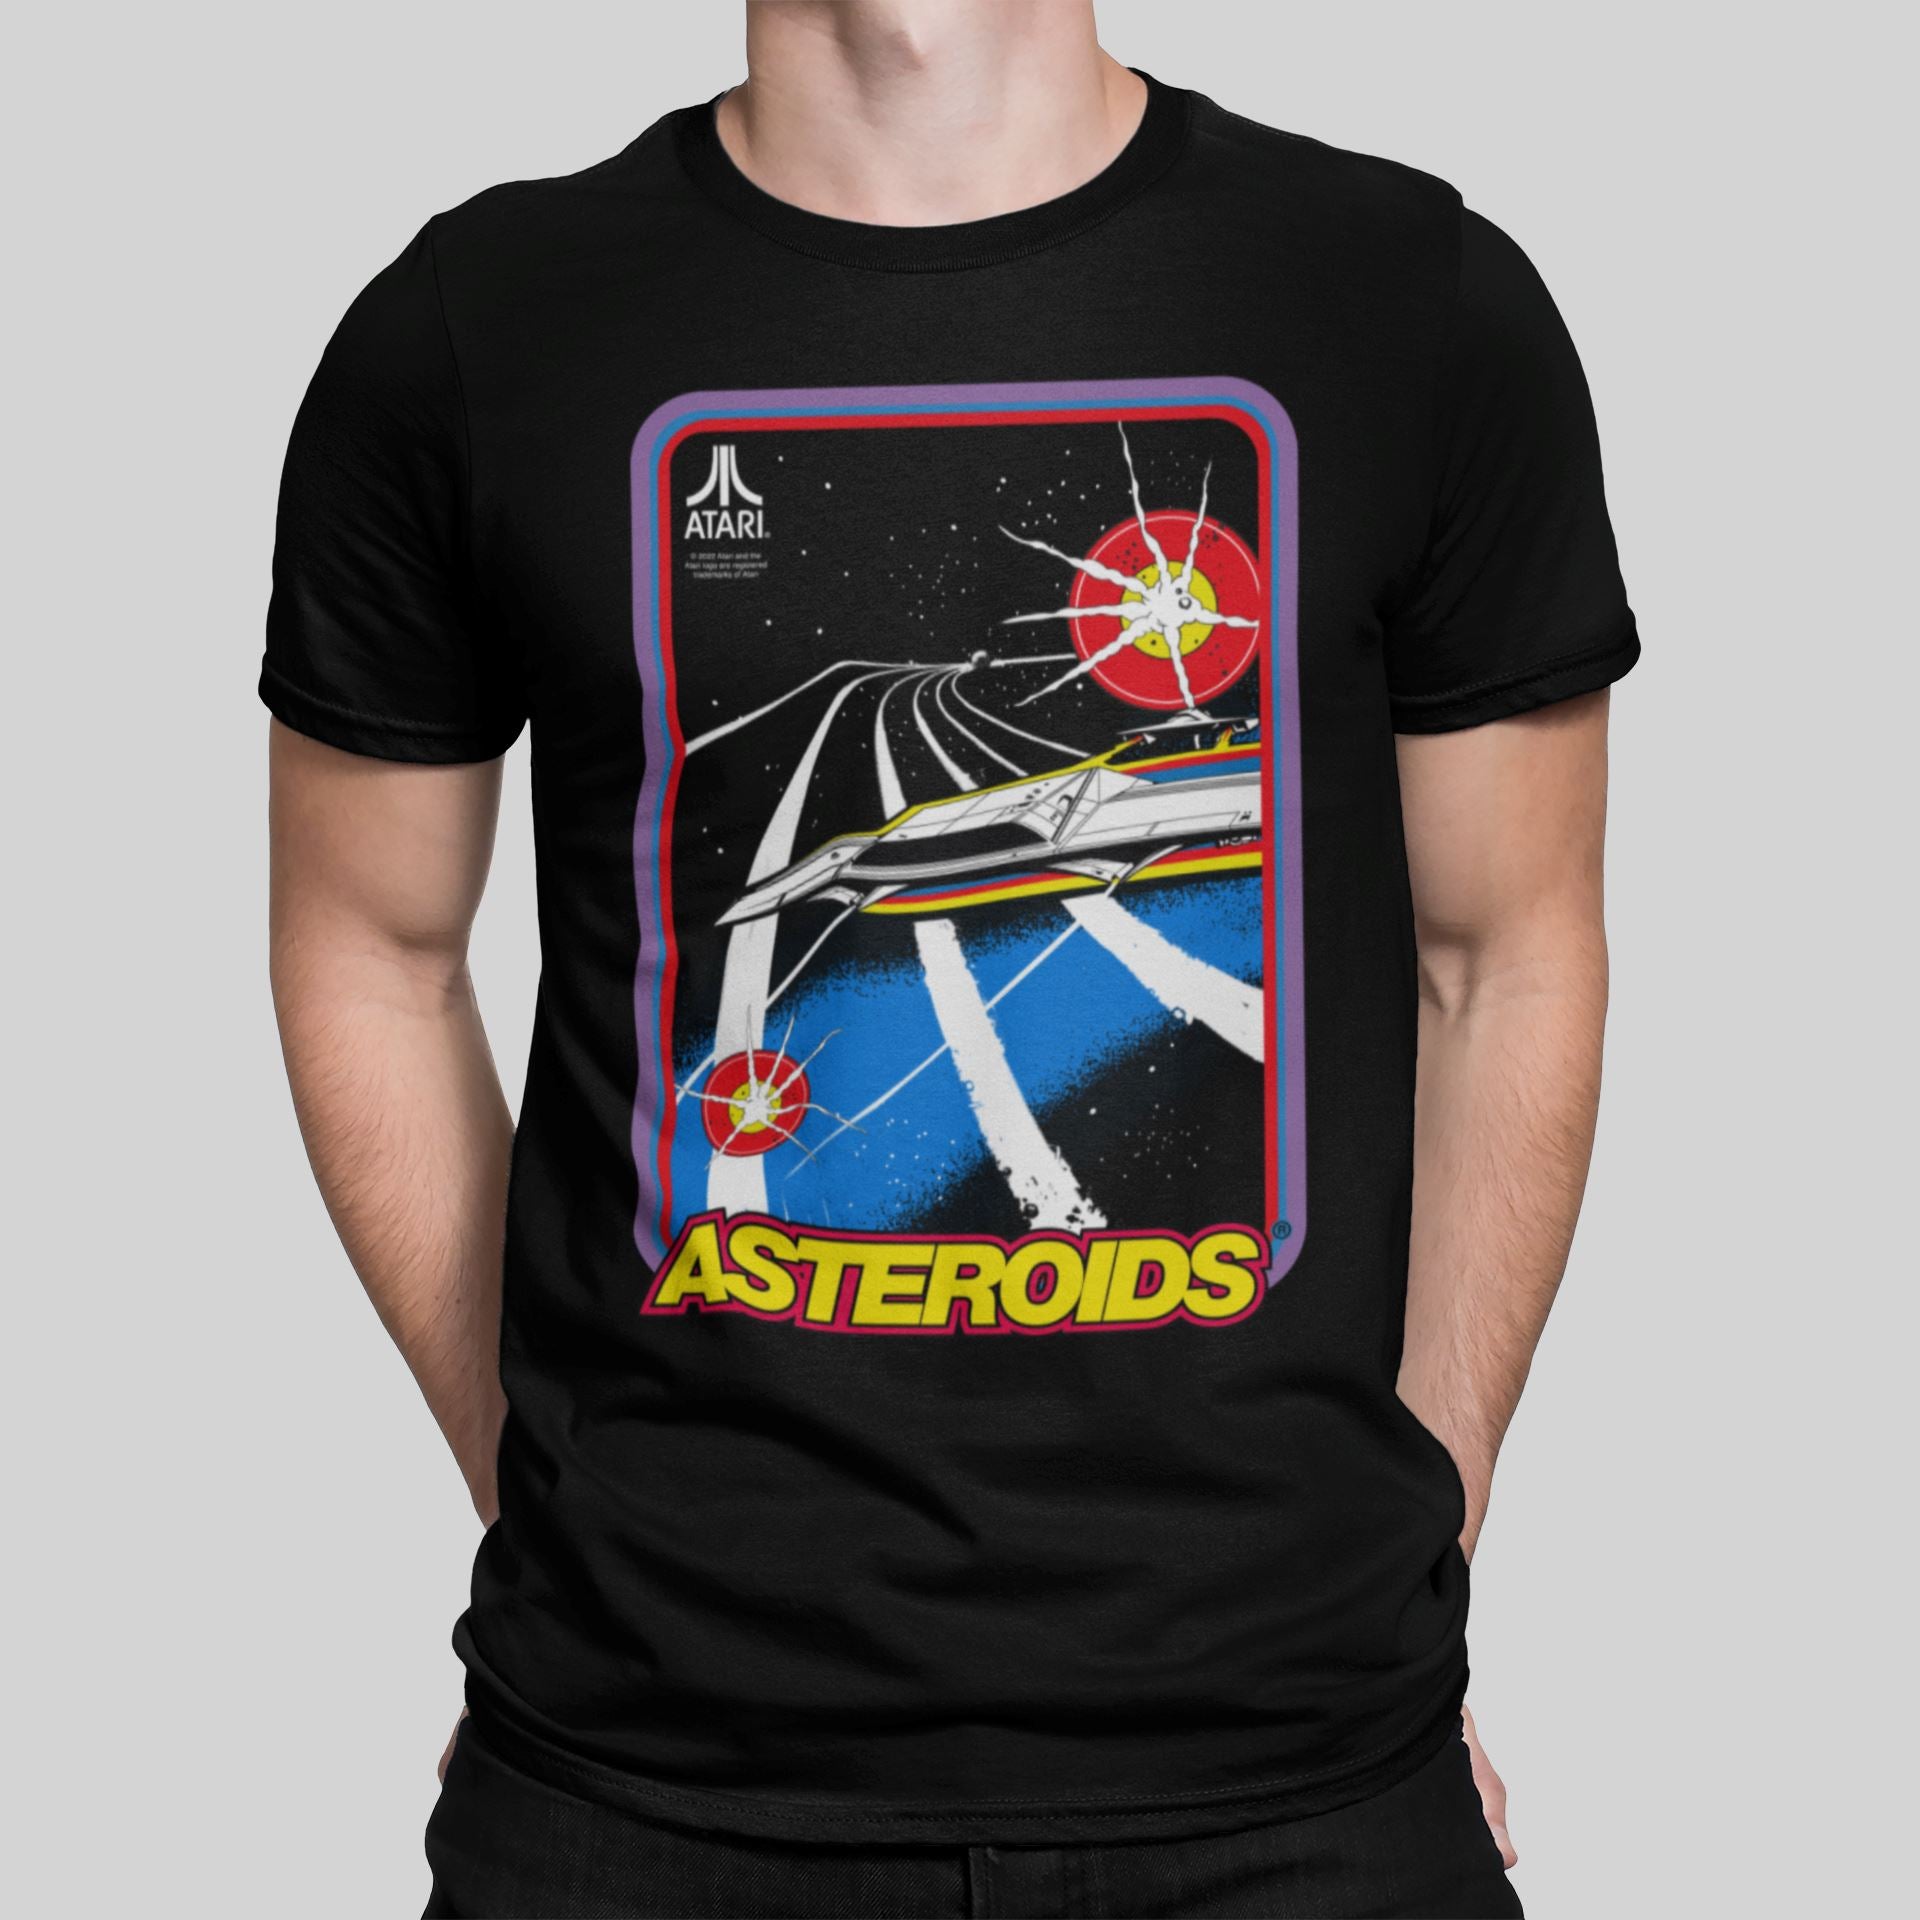 Atari Asteroids Retro Gaming T-Shirt T-Shirt Seven Squared Small 34-36" Black 